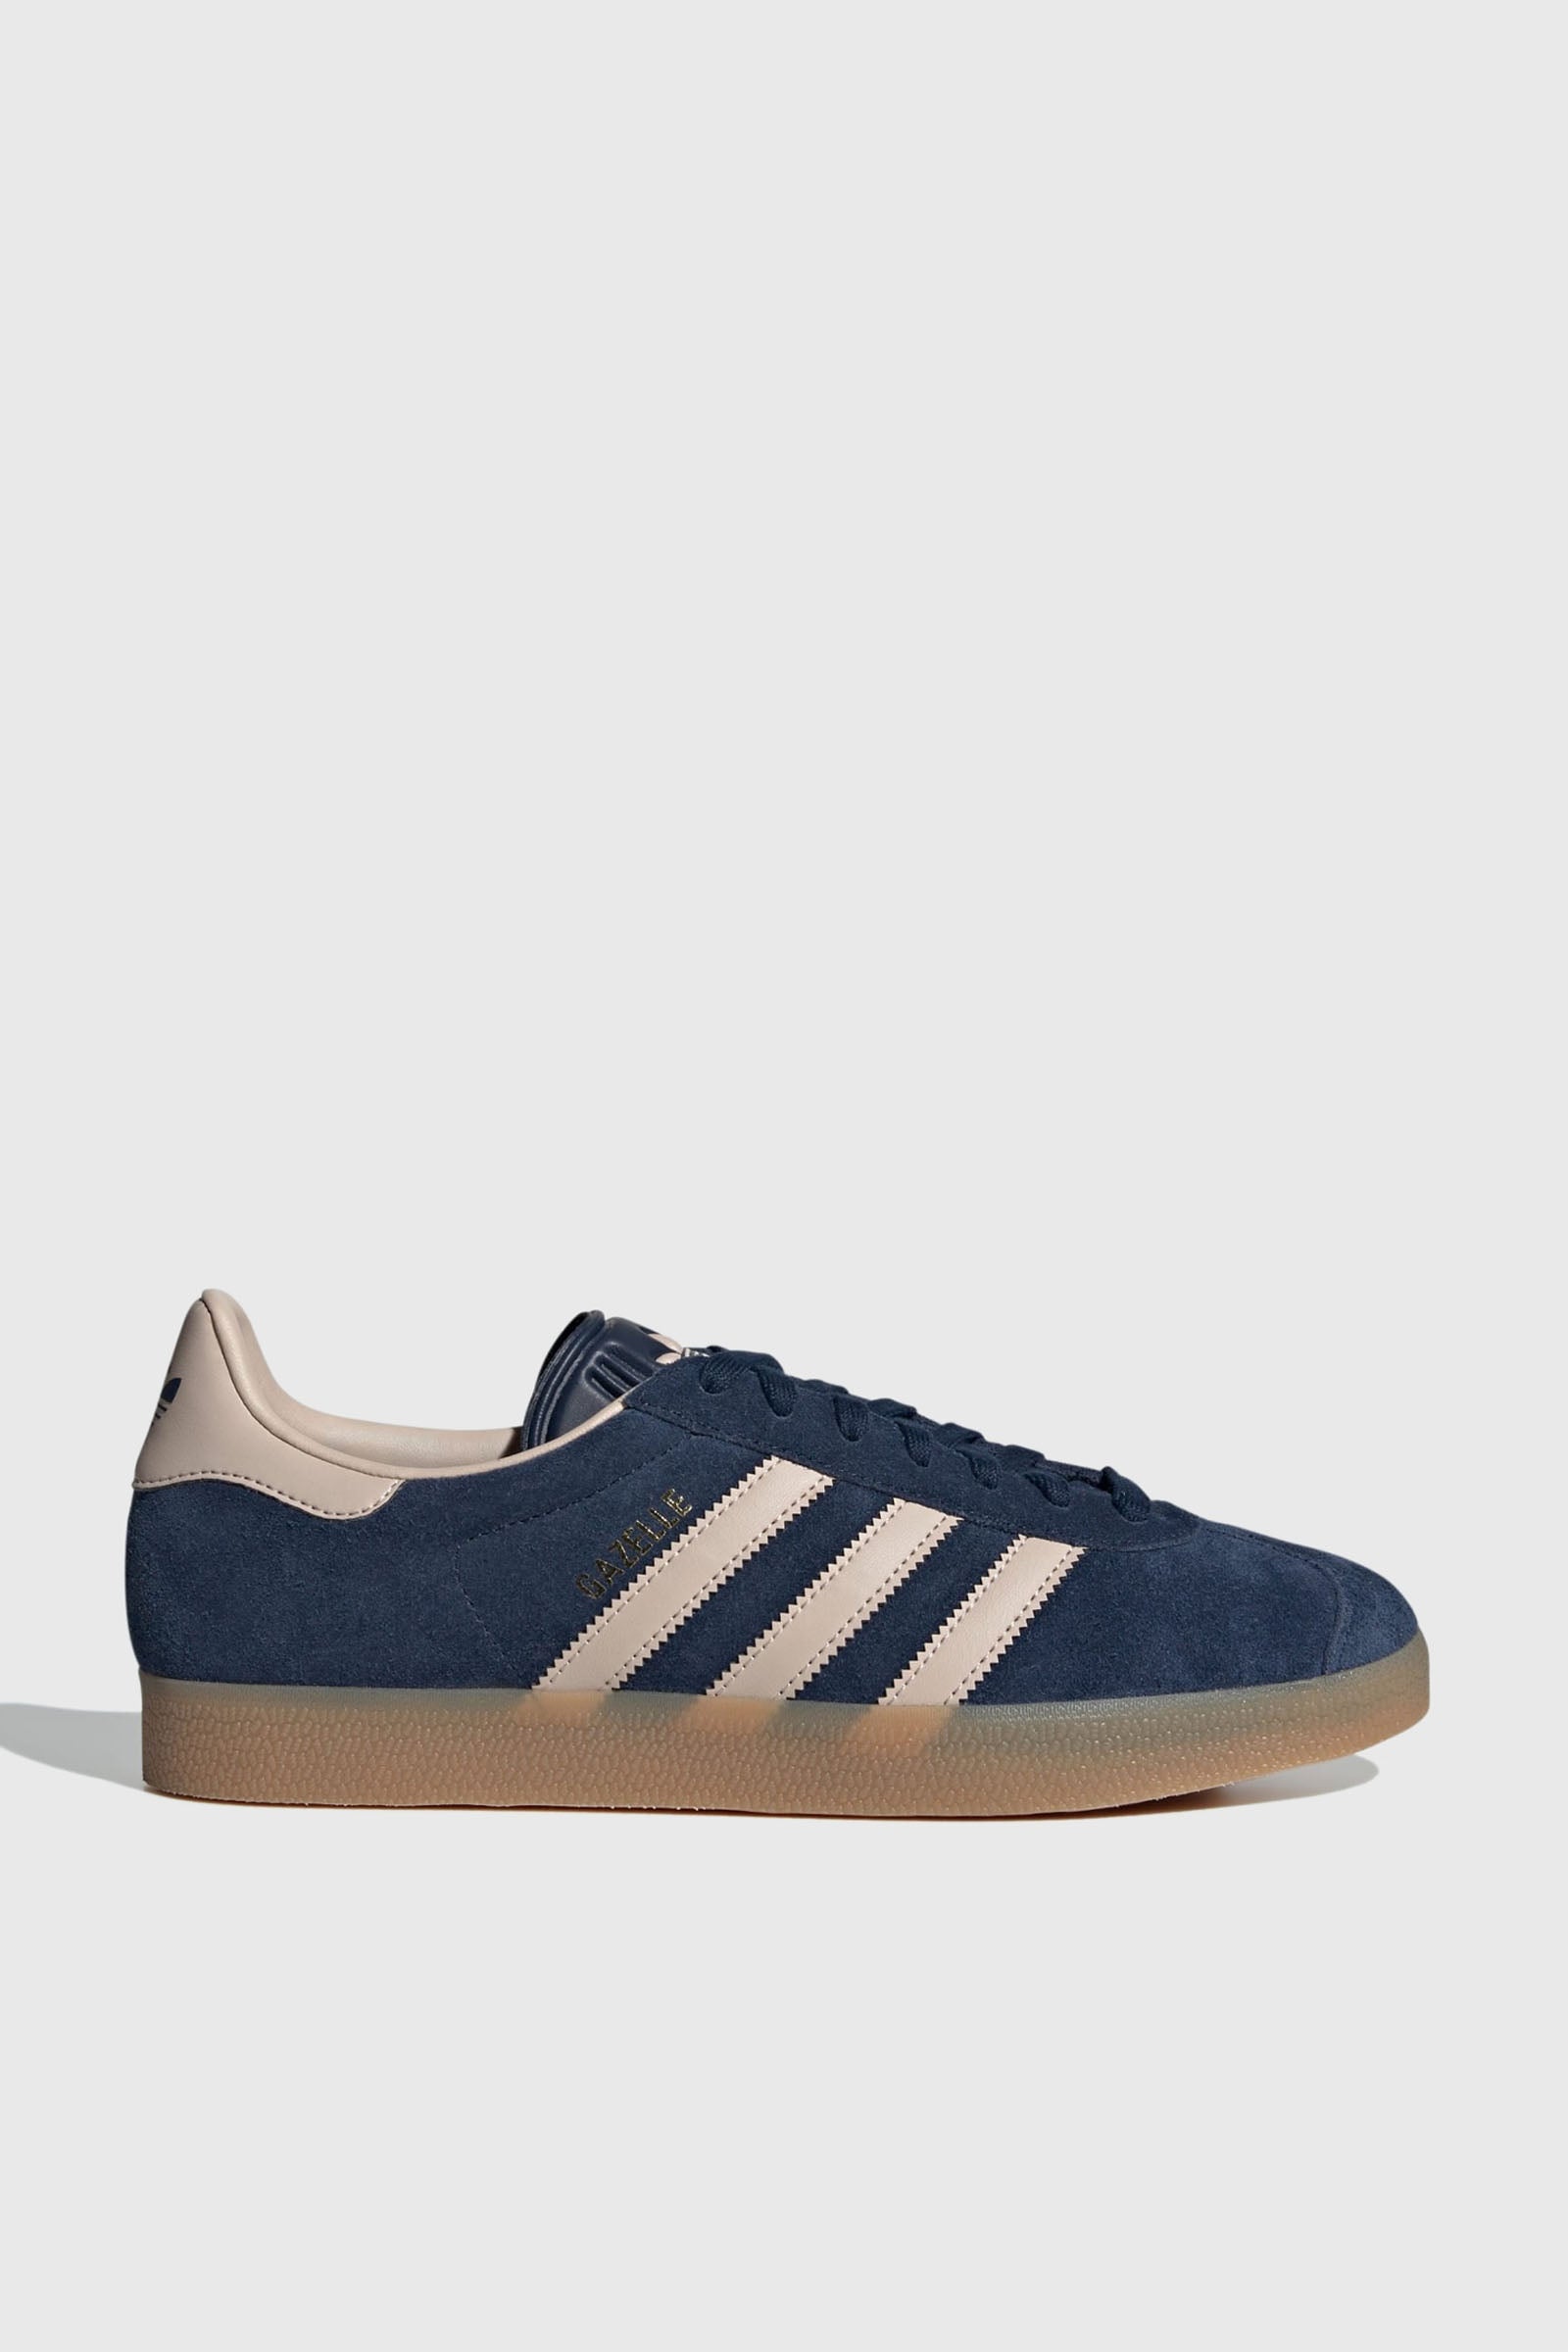 Adidas Originals Synthetic Blue Gazelle Sneaker - 1